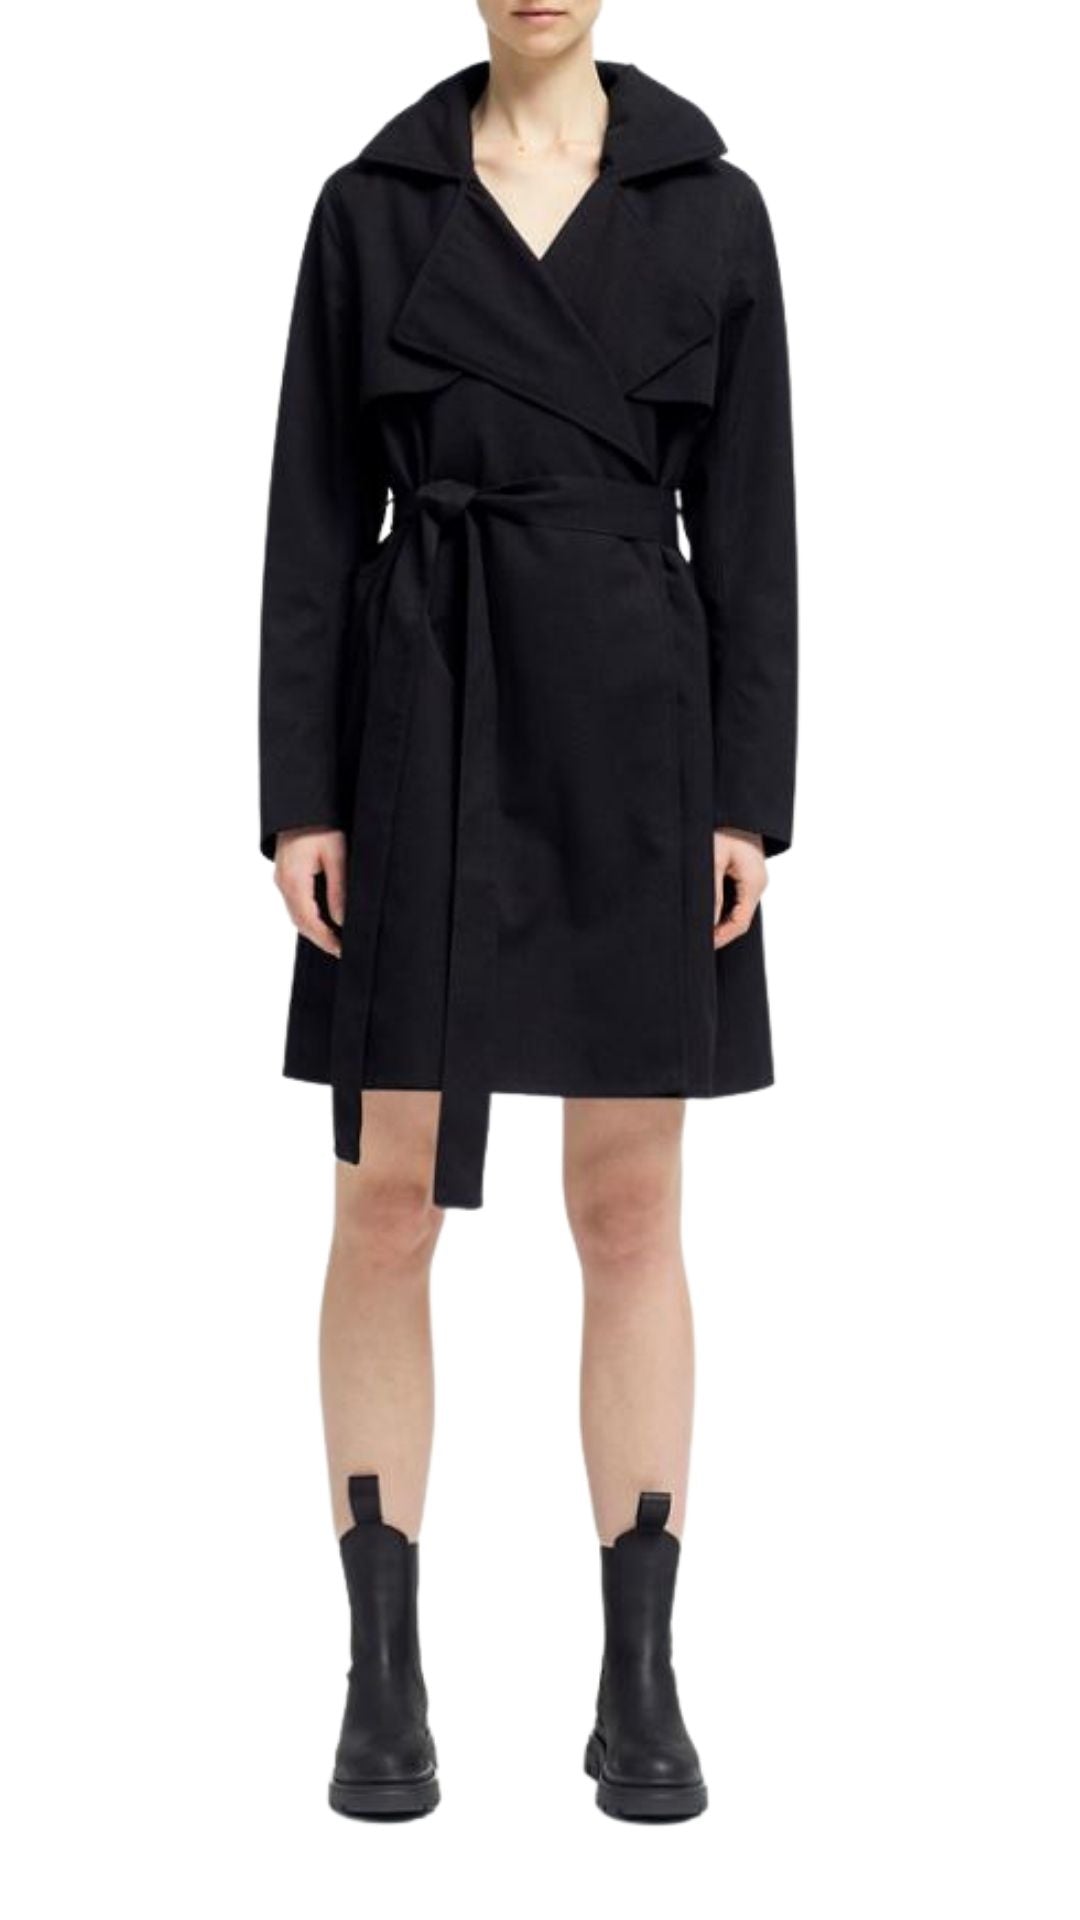 'YR' Black Short Trench Coat - Jessimara